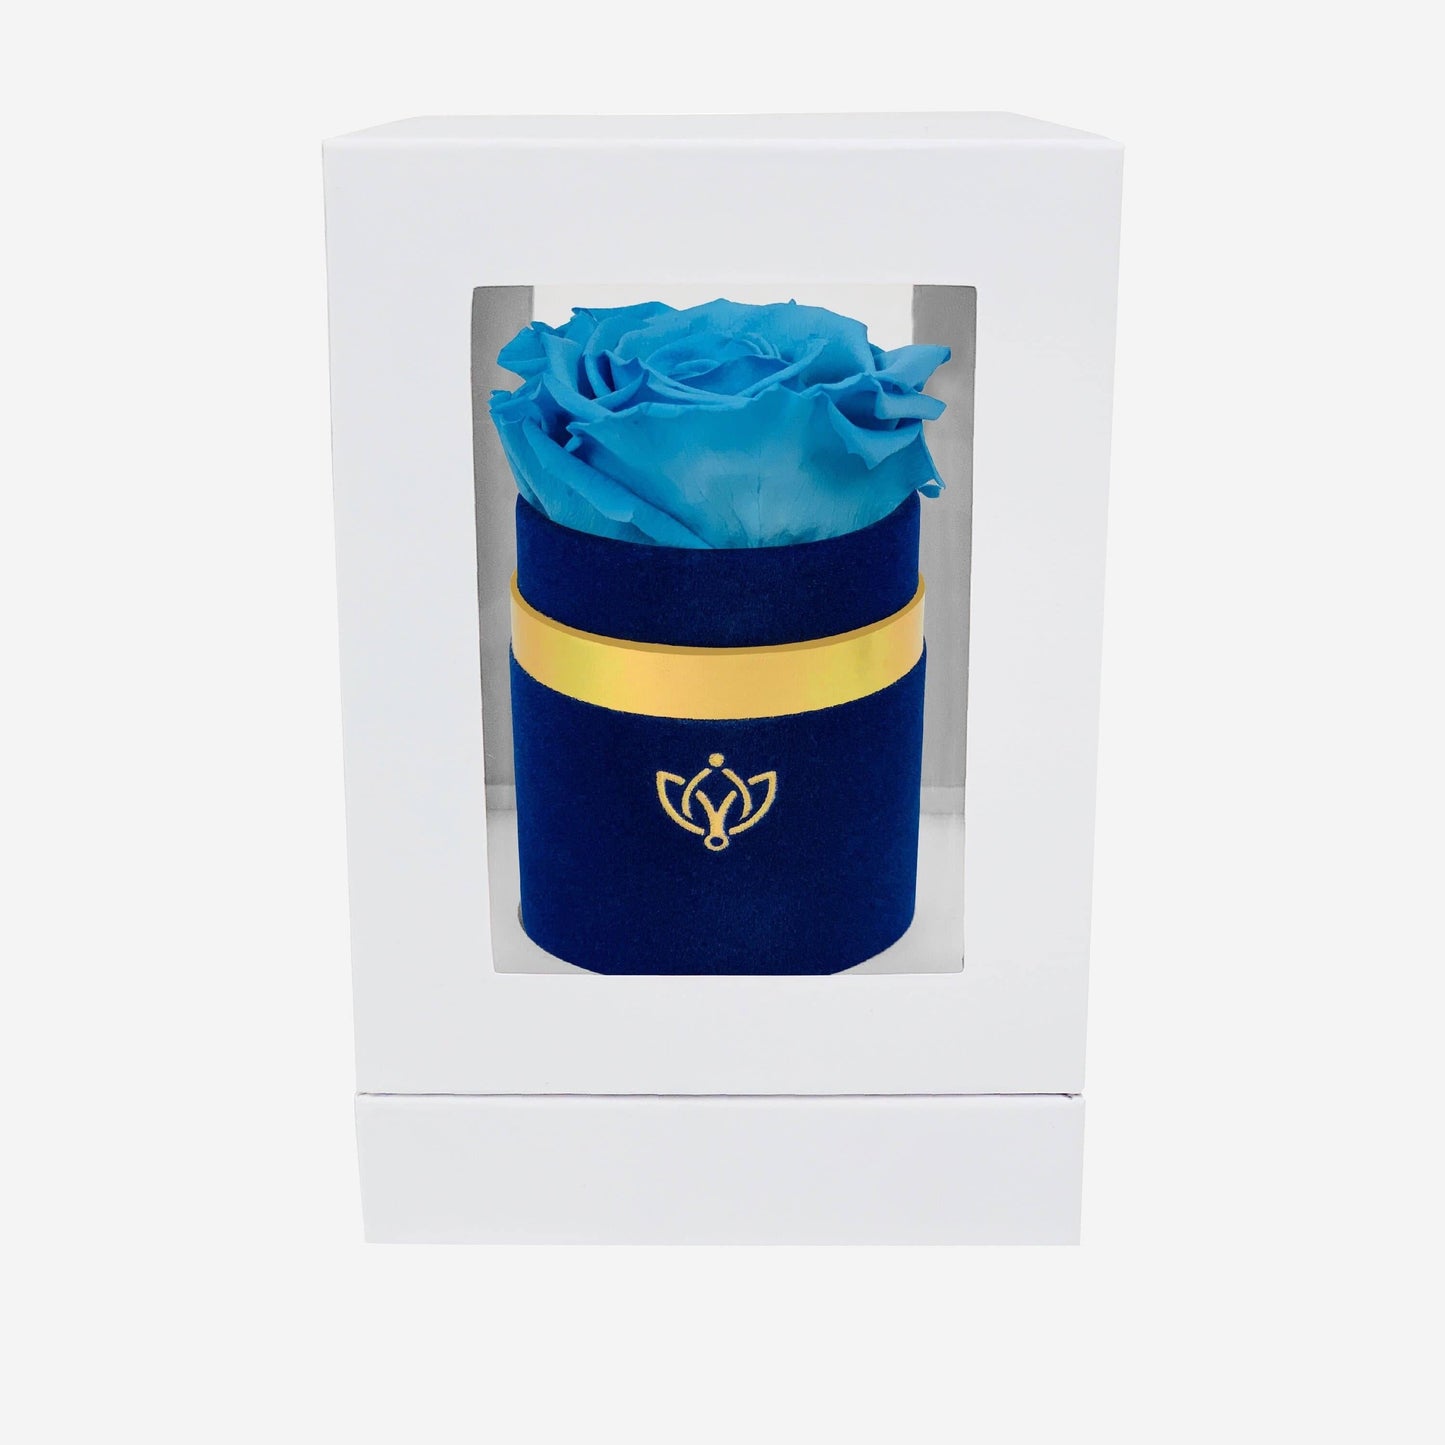 Single Royal Blue Suede Box | Light Blue Rose - The Million Roses